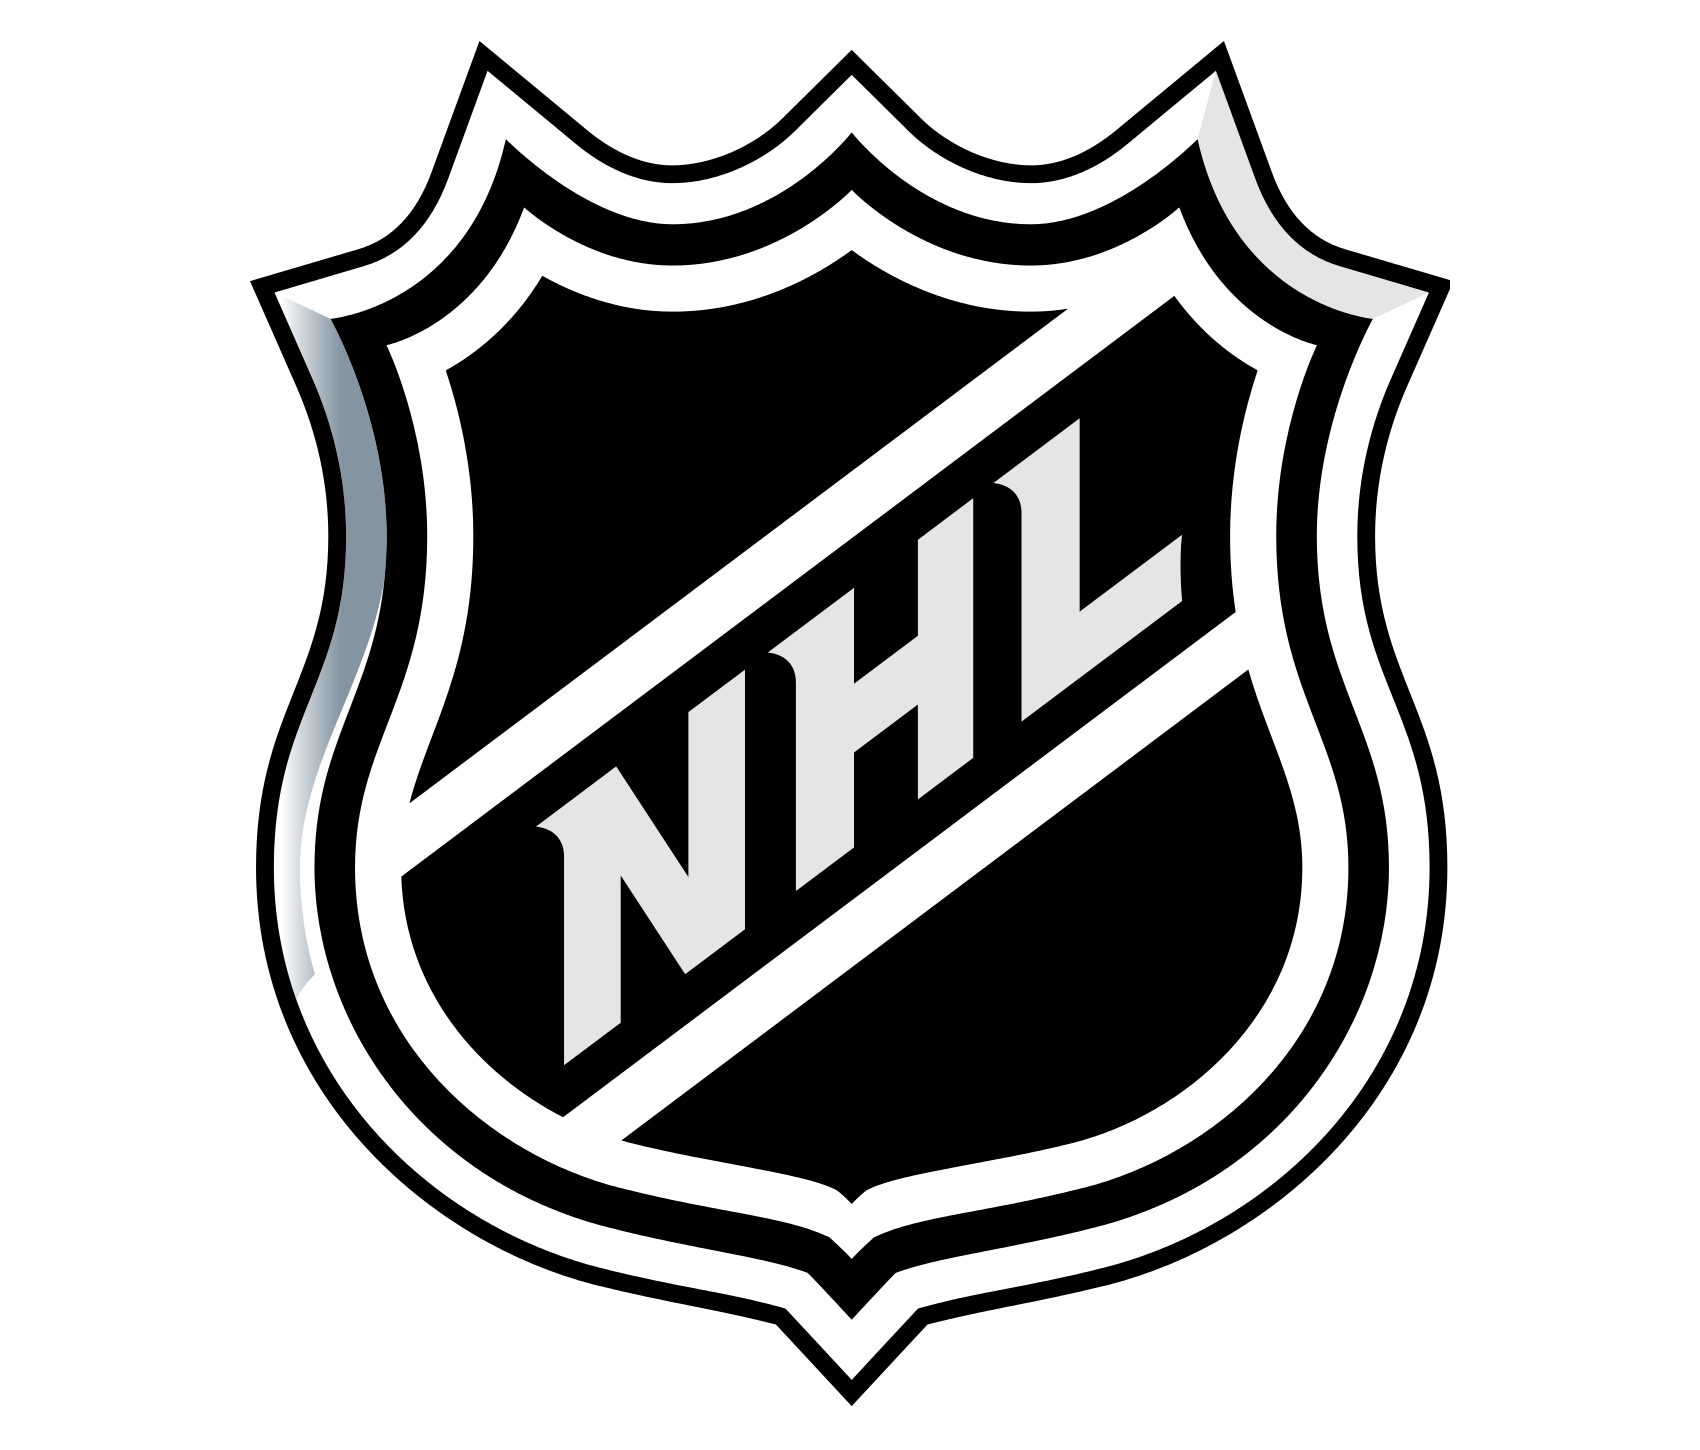 Black and White Hockey Logo - NHL Logo, National Hockey League Symbol, Meaning, History and Evolution